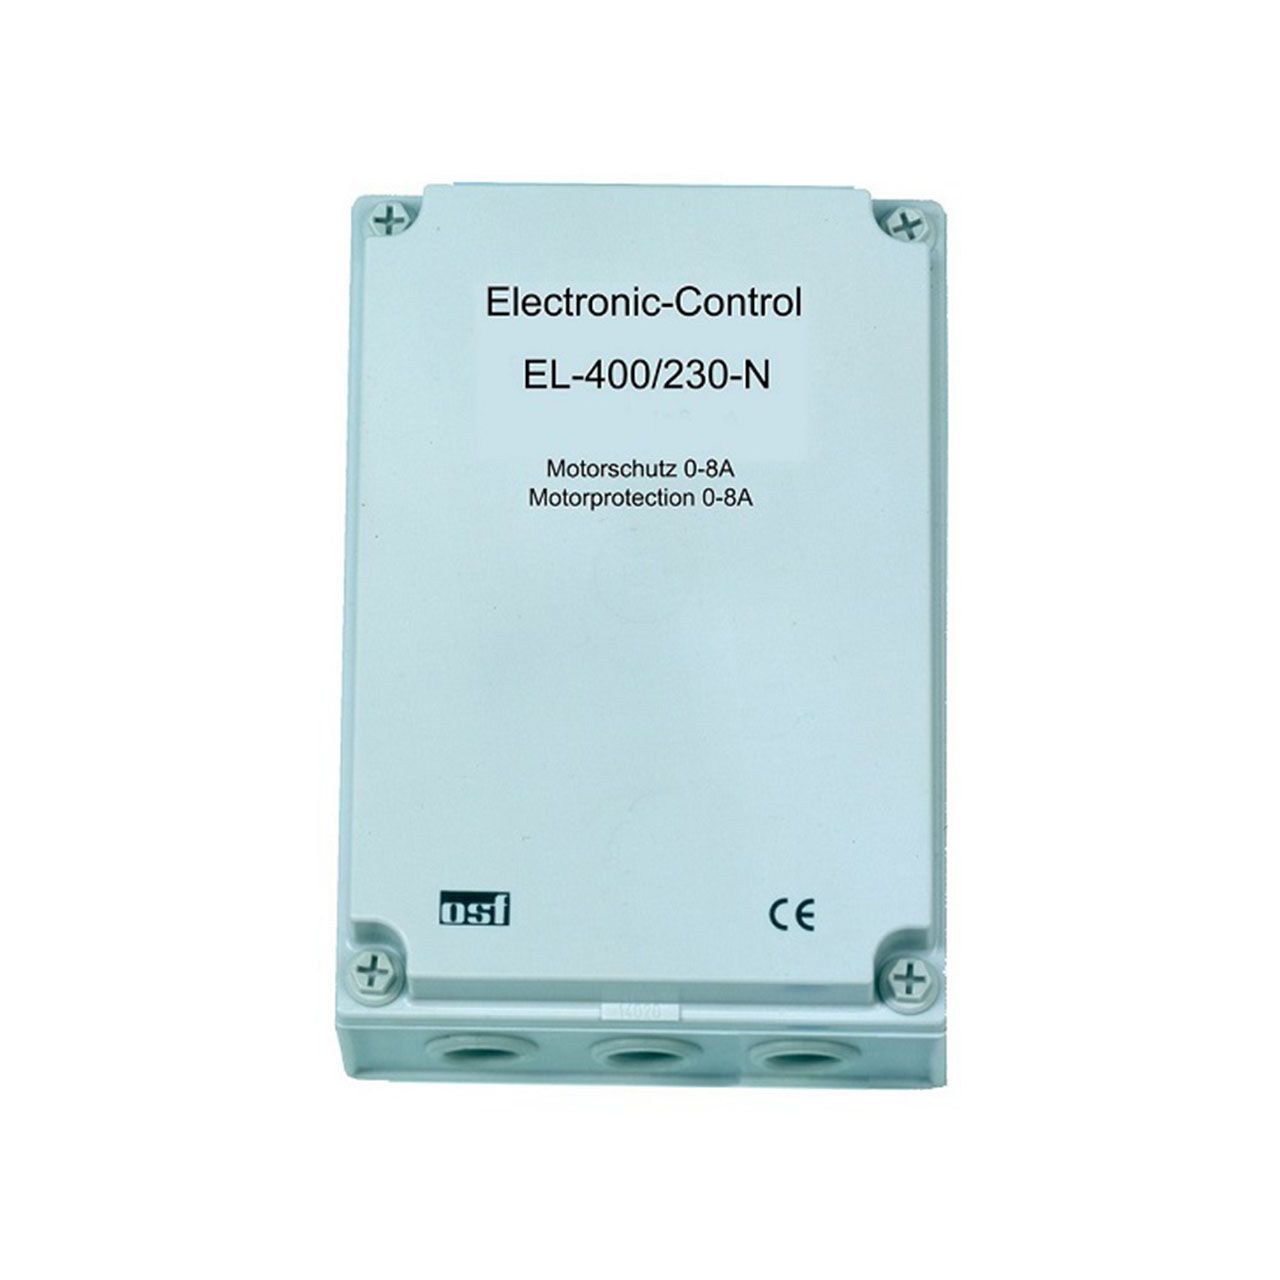 osf Electronic Control EL-400/230-N